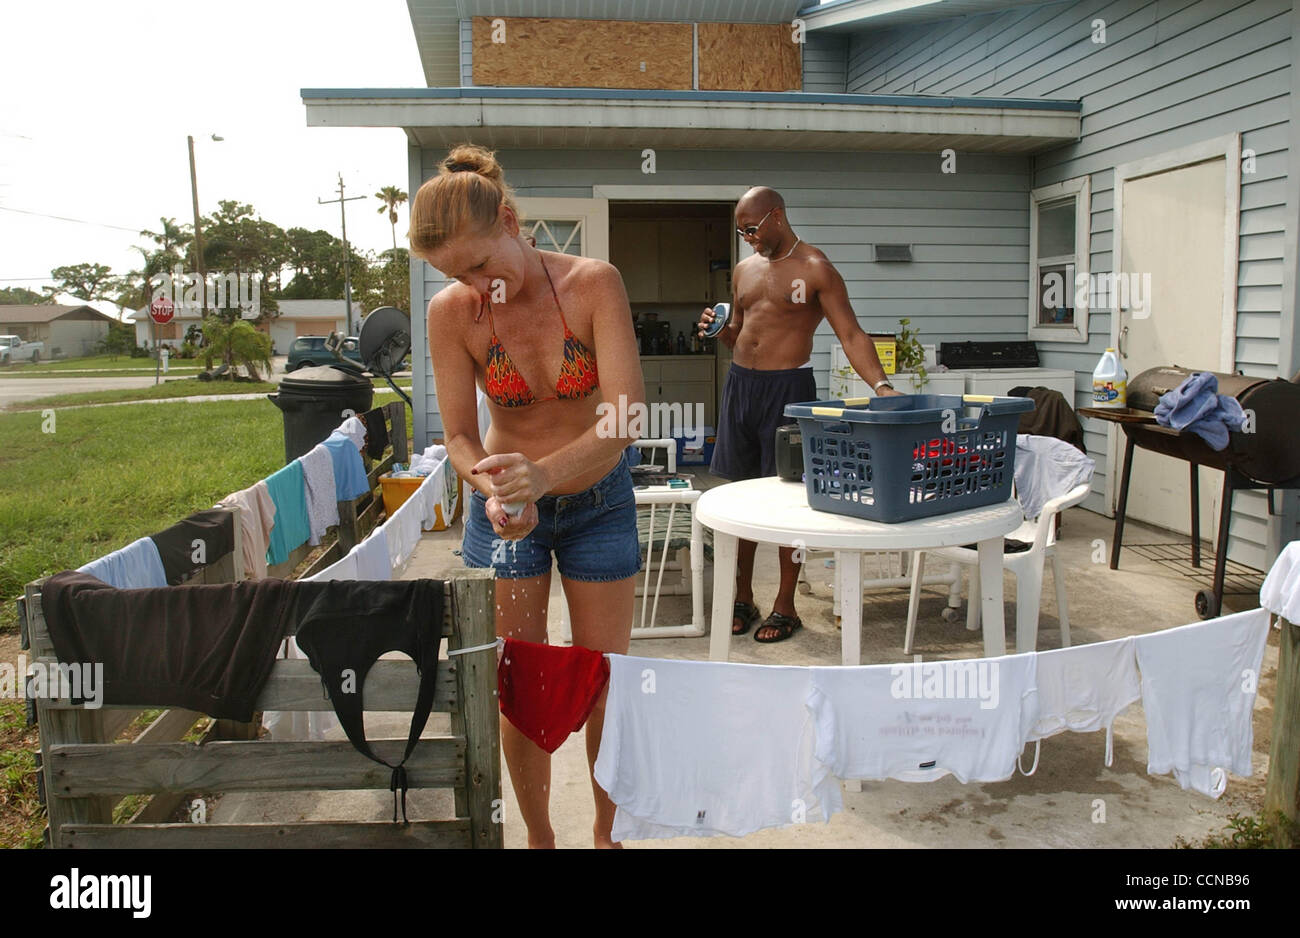 091104 HUR laundry JS-A : JENSEN BEACH: Angela Tullis <cq> and her ...